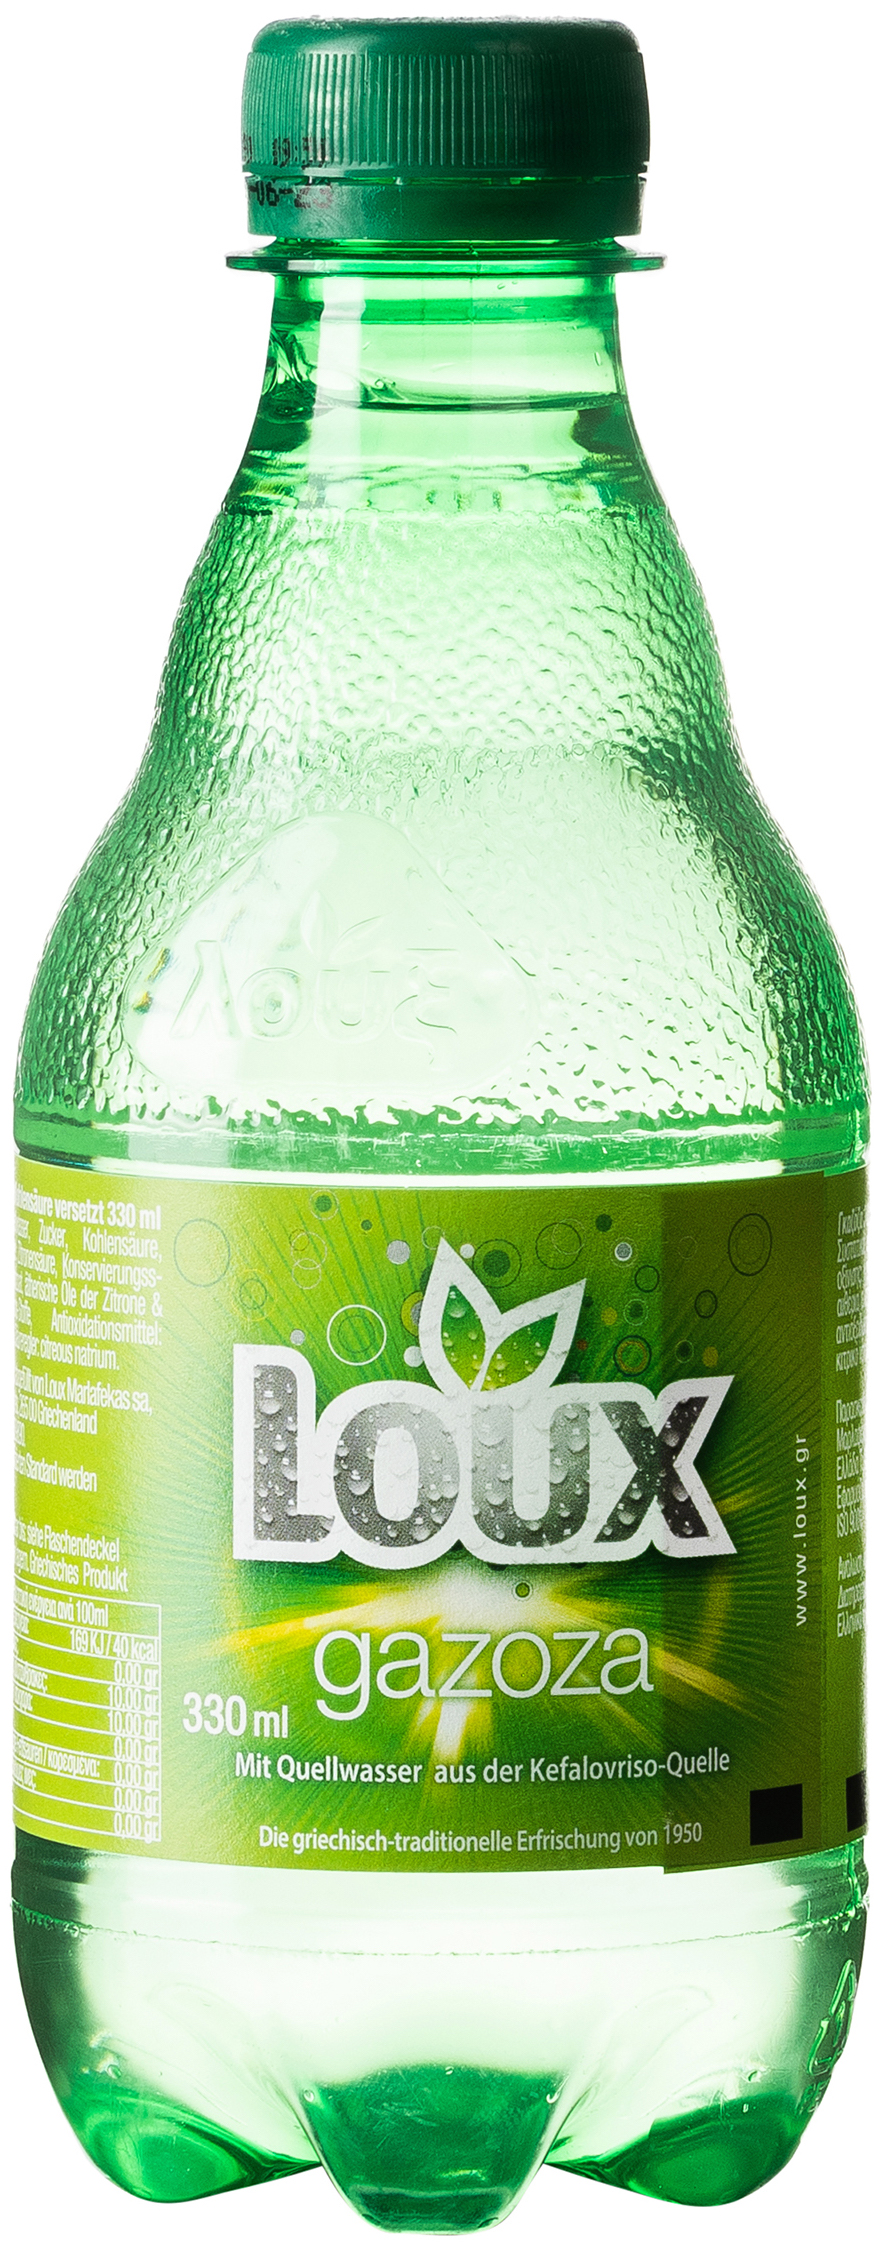 Loux Gazoza Zitronen Limonade 0,33L EINWEG